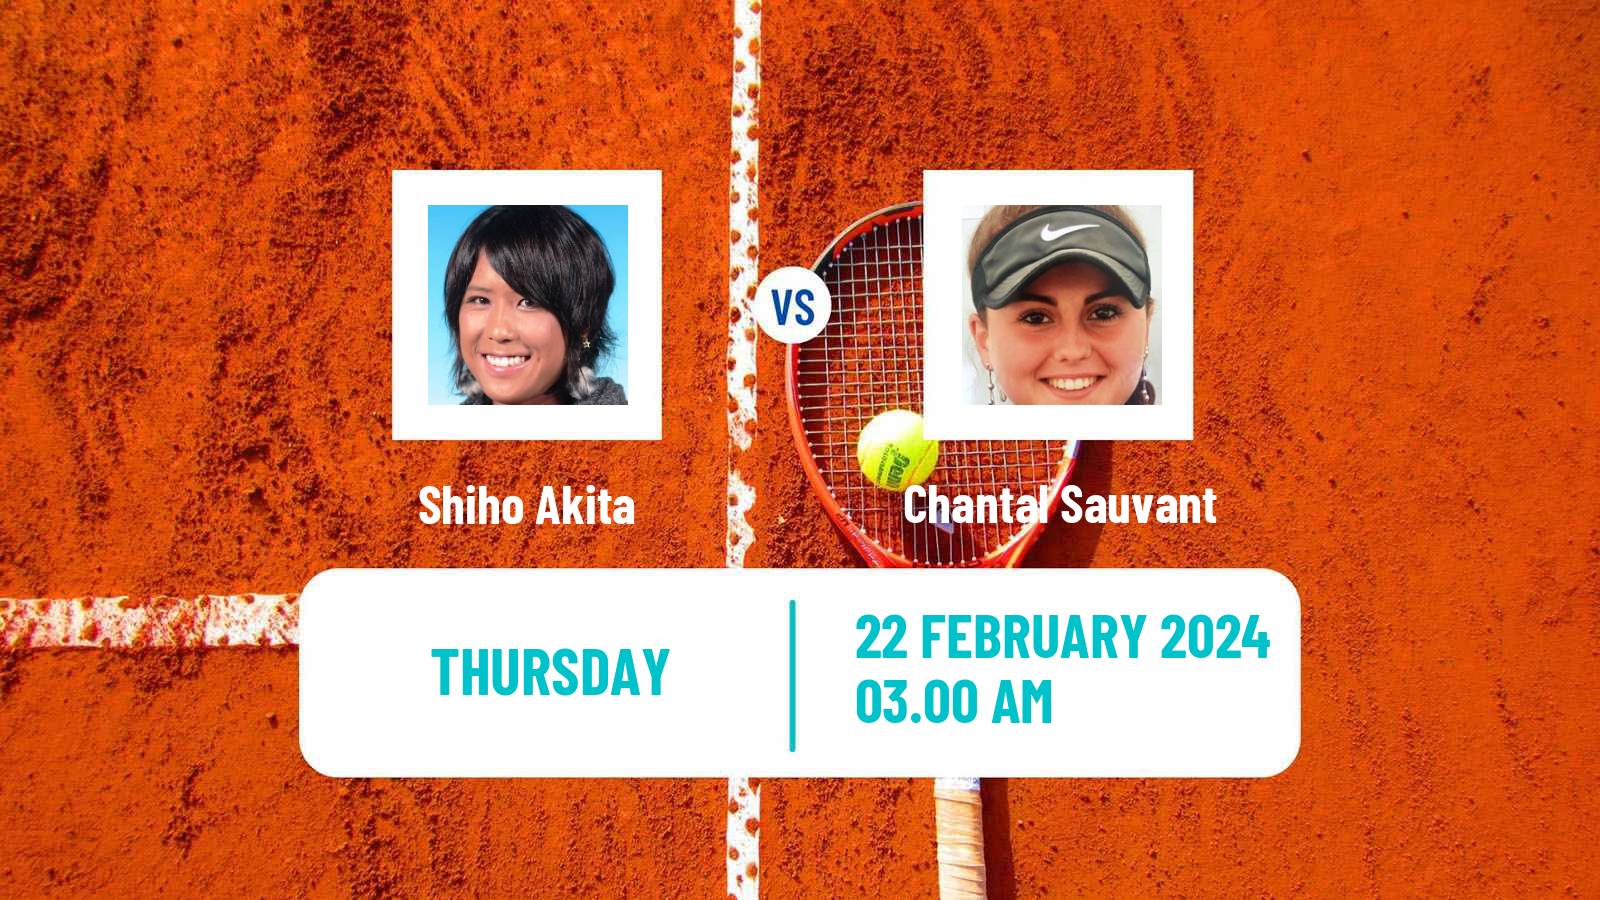 Tennis ITF W35 Hammamet 2 Women Shiho Akita - Chantal Sauvant